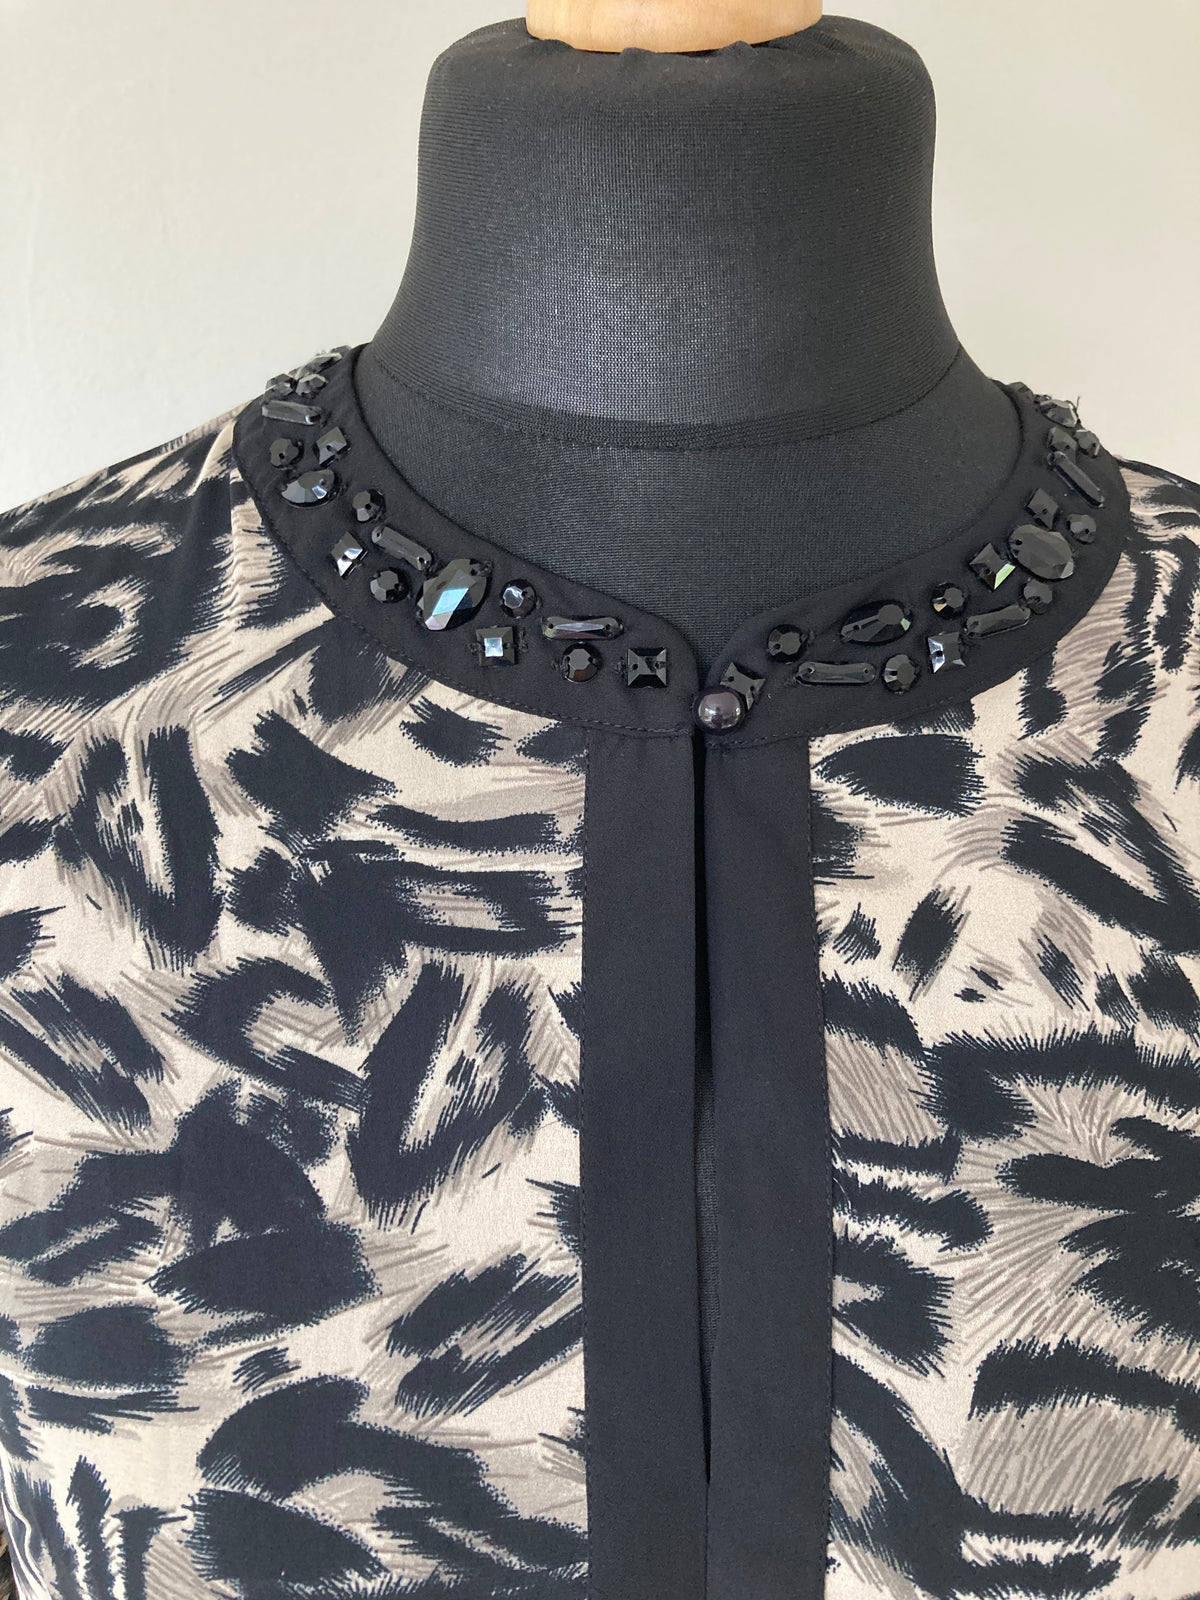 Leopard print tunic by BONPRIX size 10